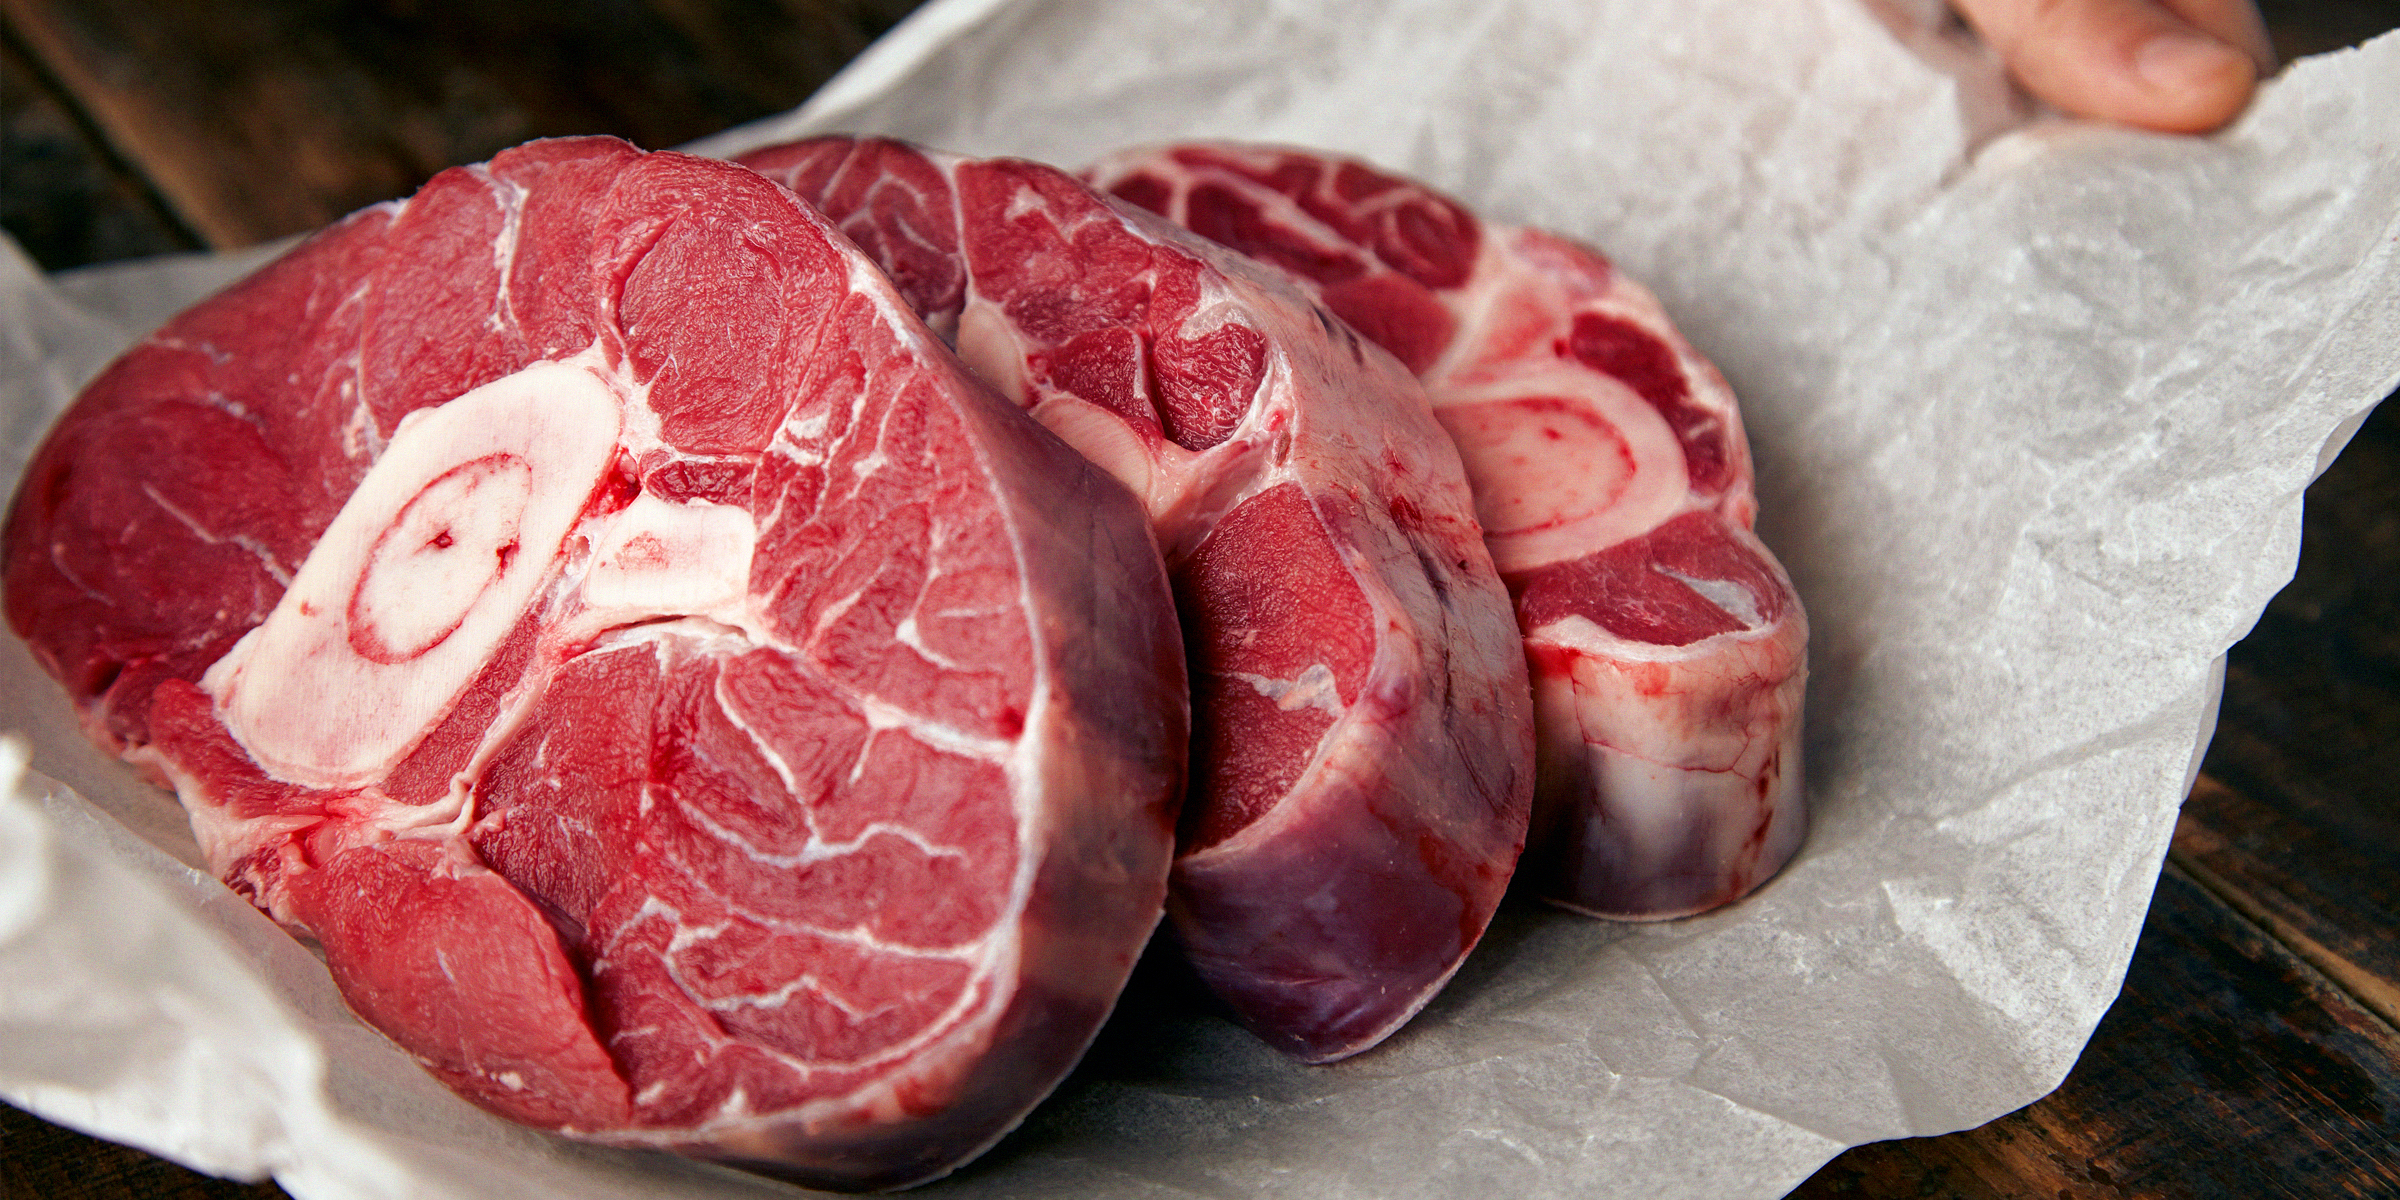 Raw beef | Source: Shutterstock